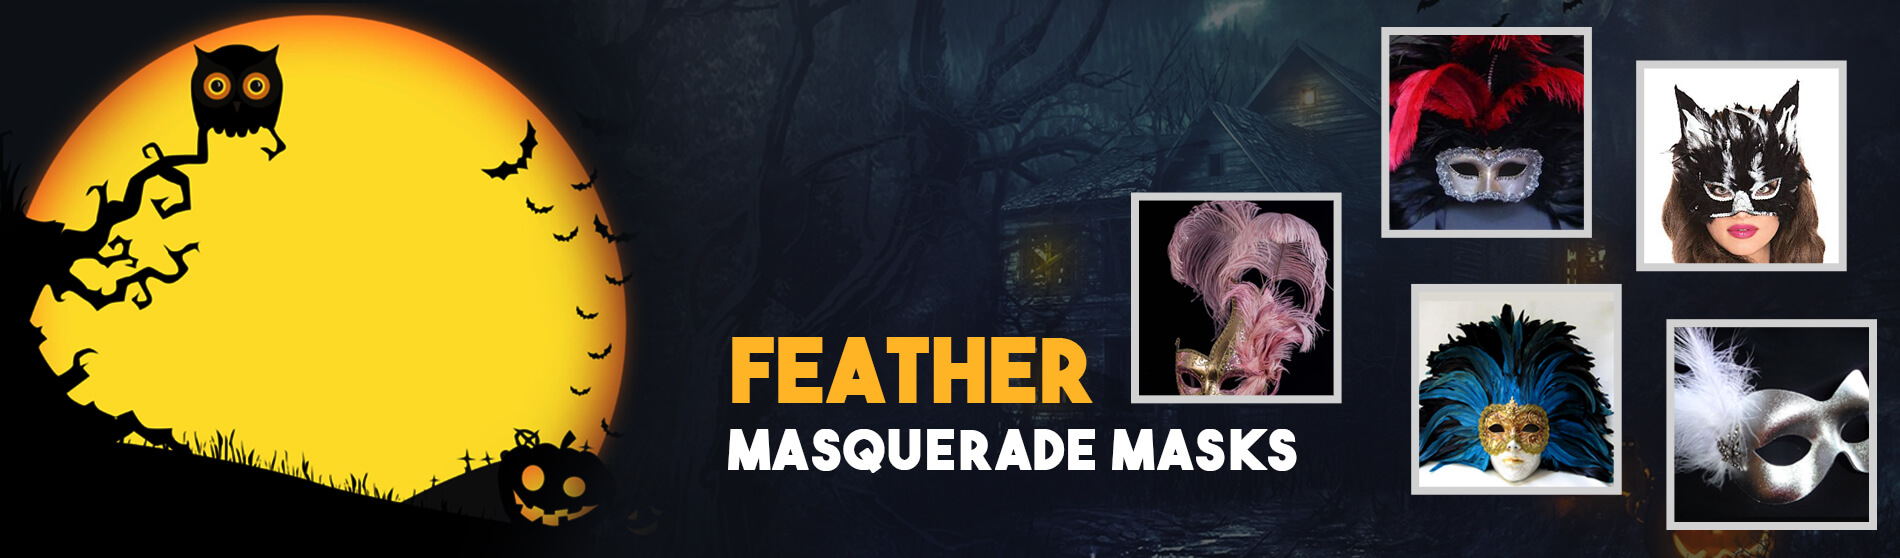 Glendale Halloween : Feather Masquerade Masks